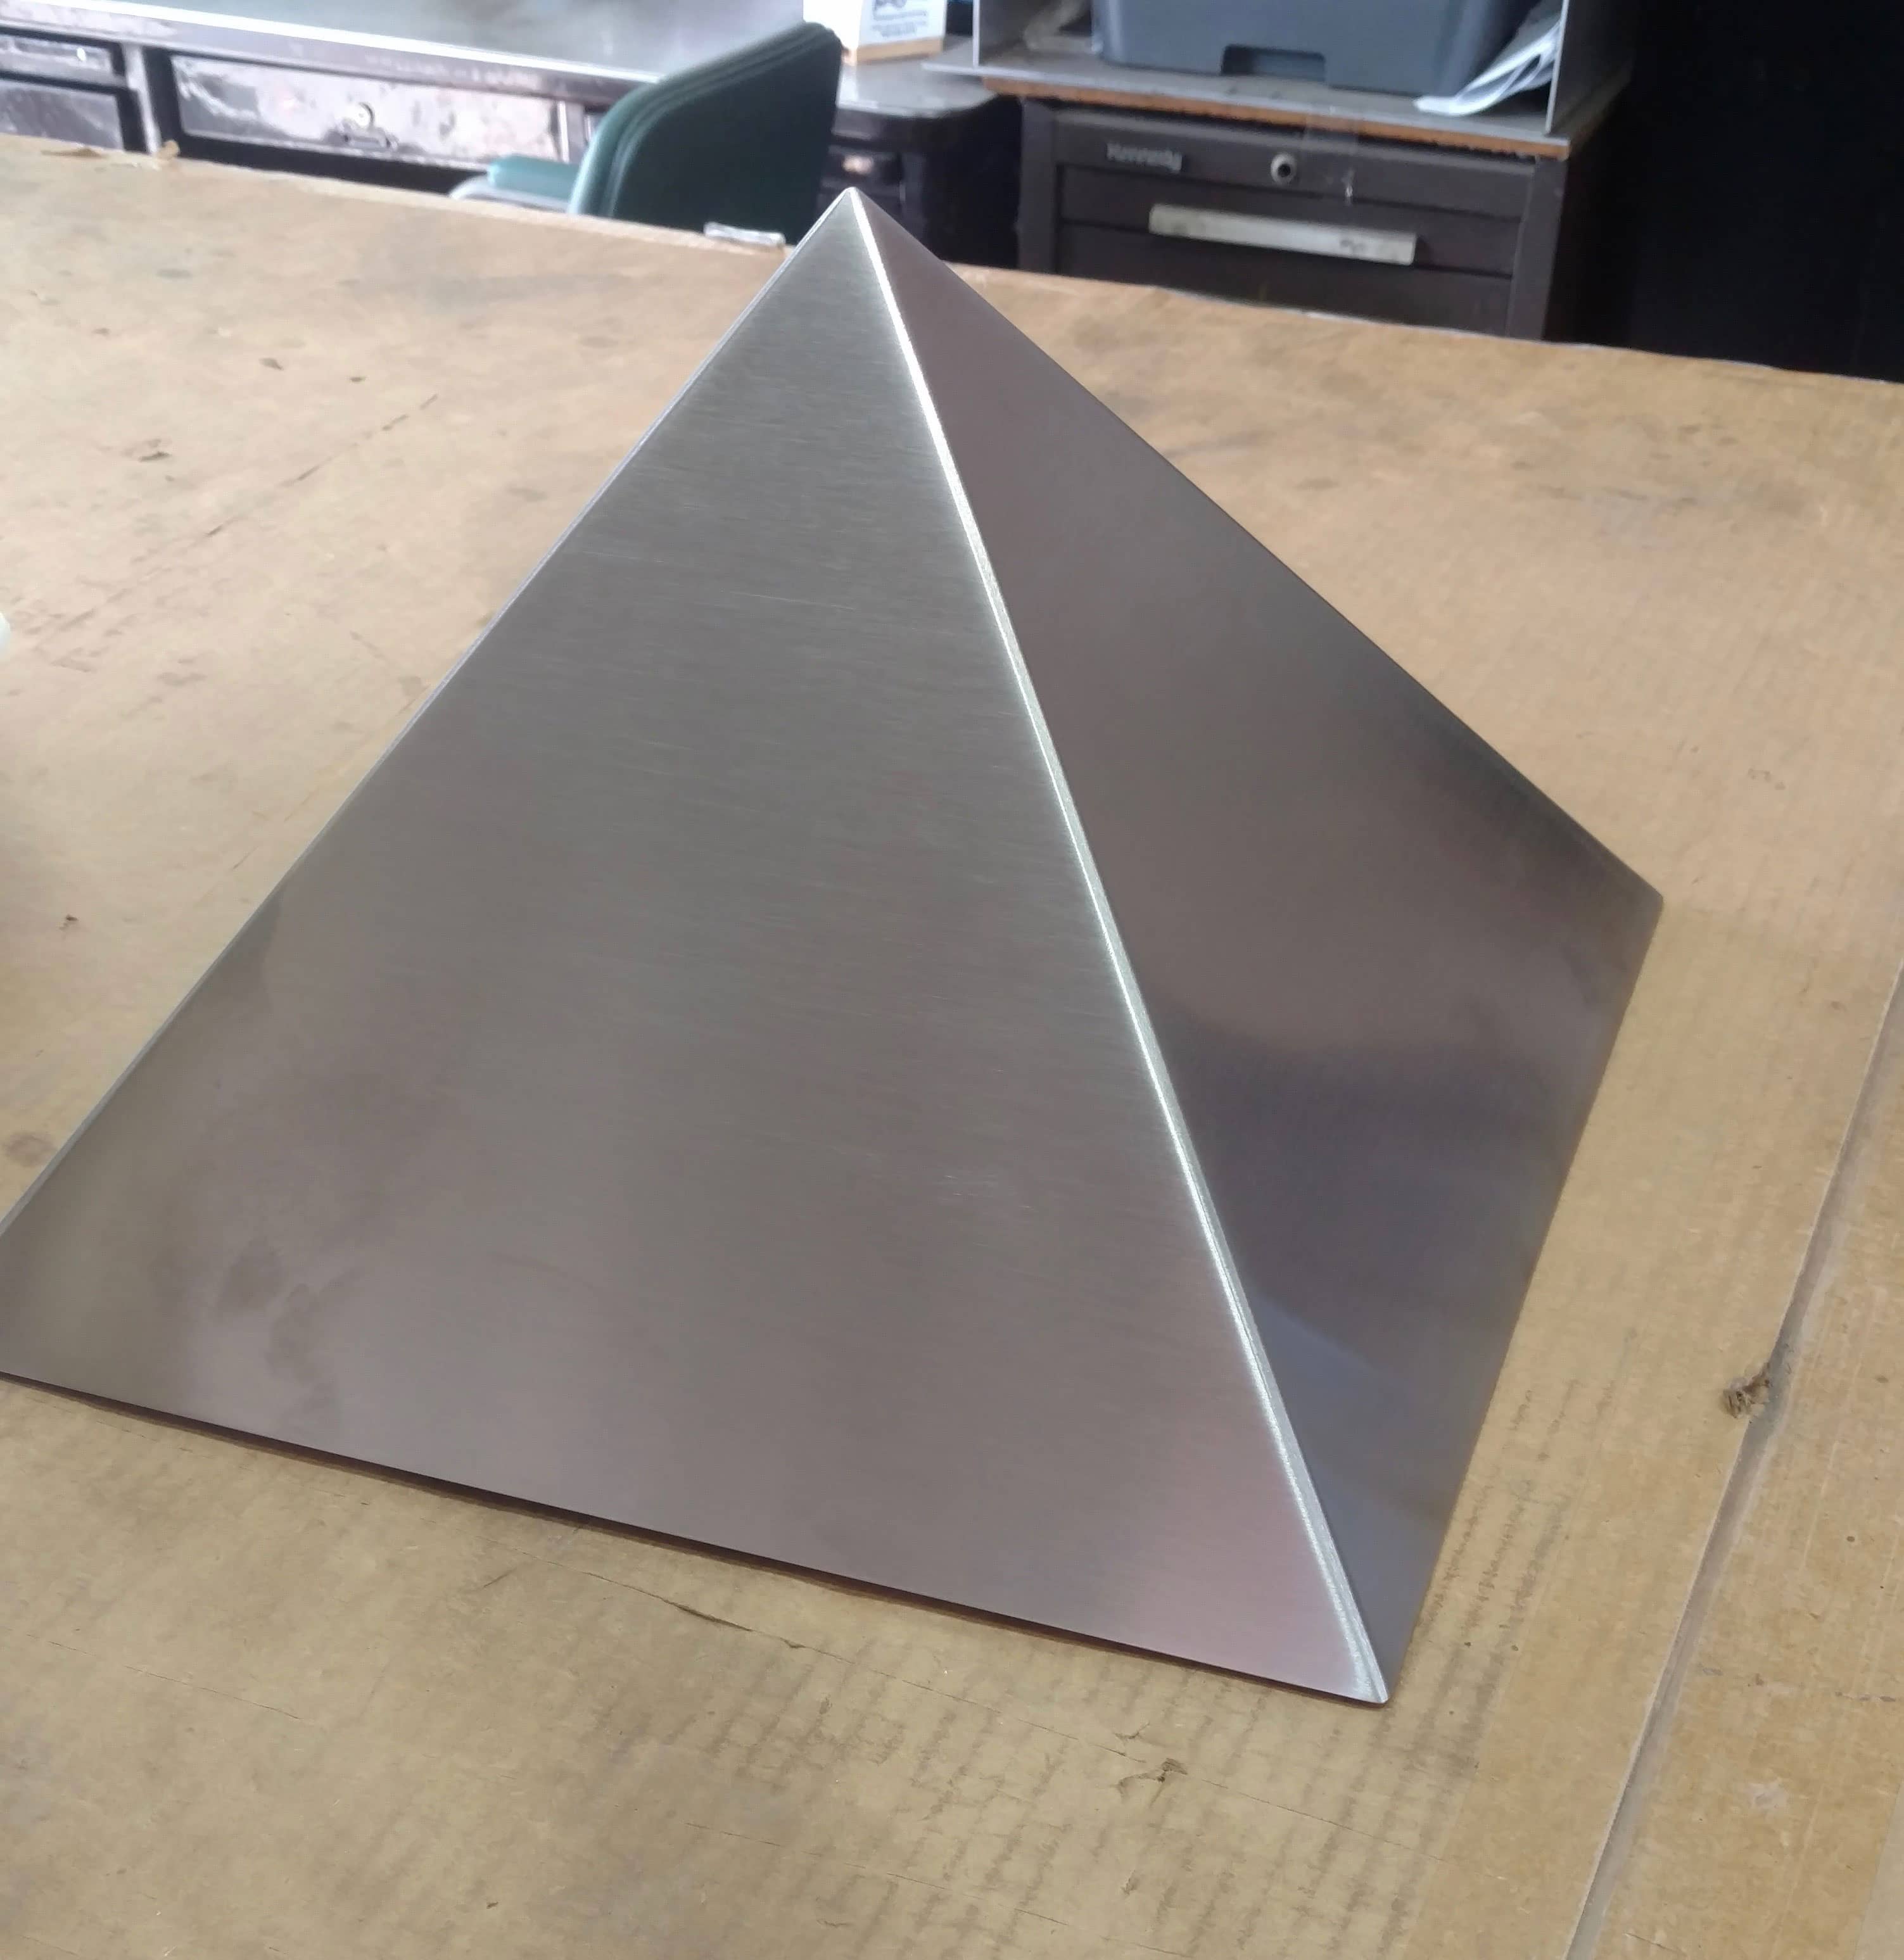 Stainless Steel fabricated custom made pyramid